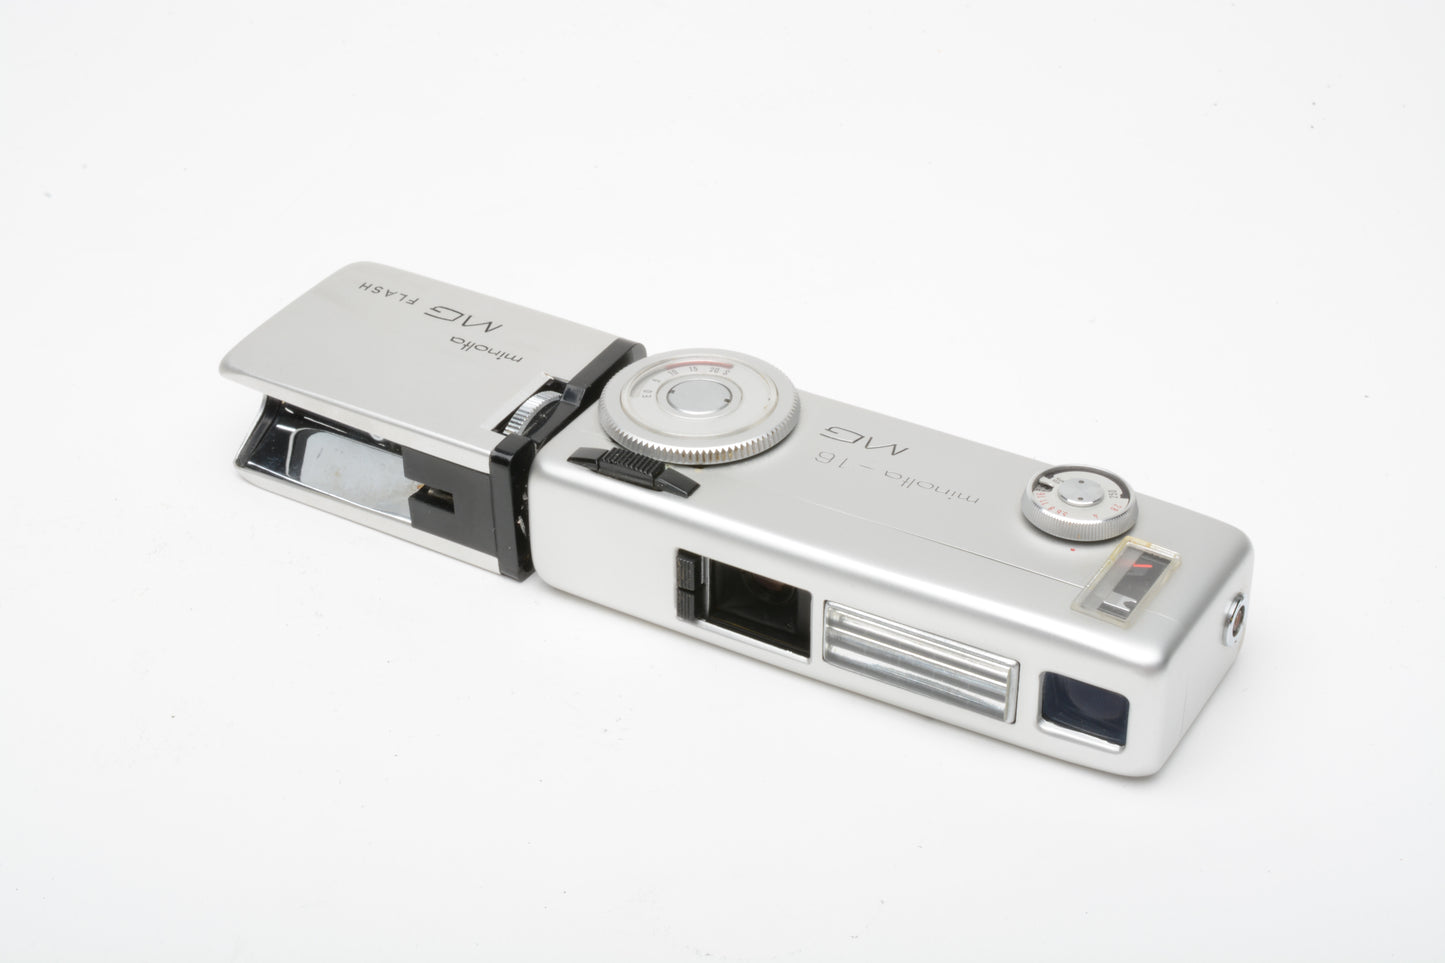 Minolta 16 MG compact "Spy" camera, flash adapter, cases, manual, box, nice!